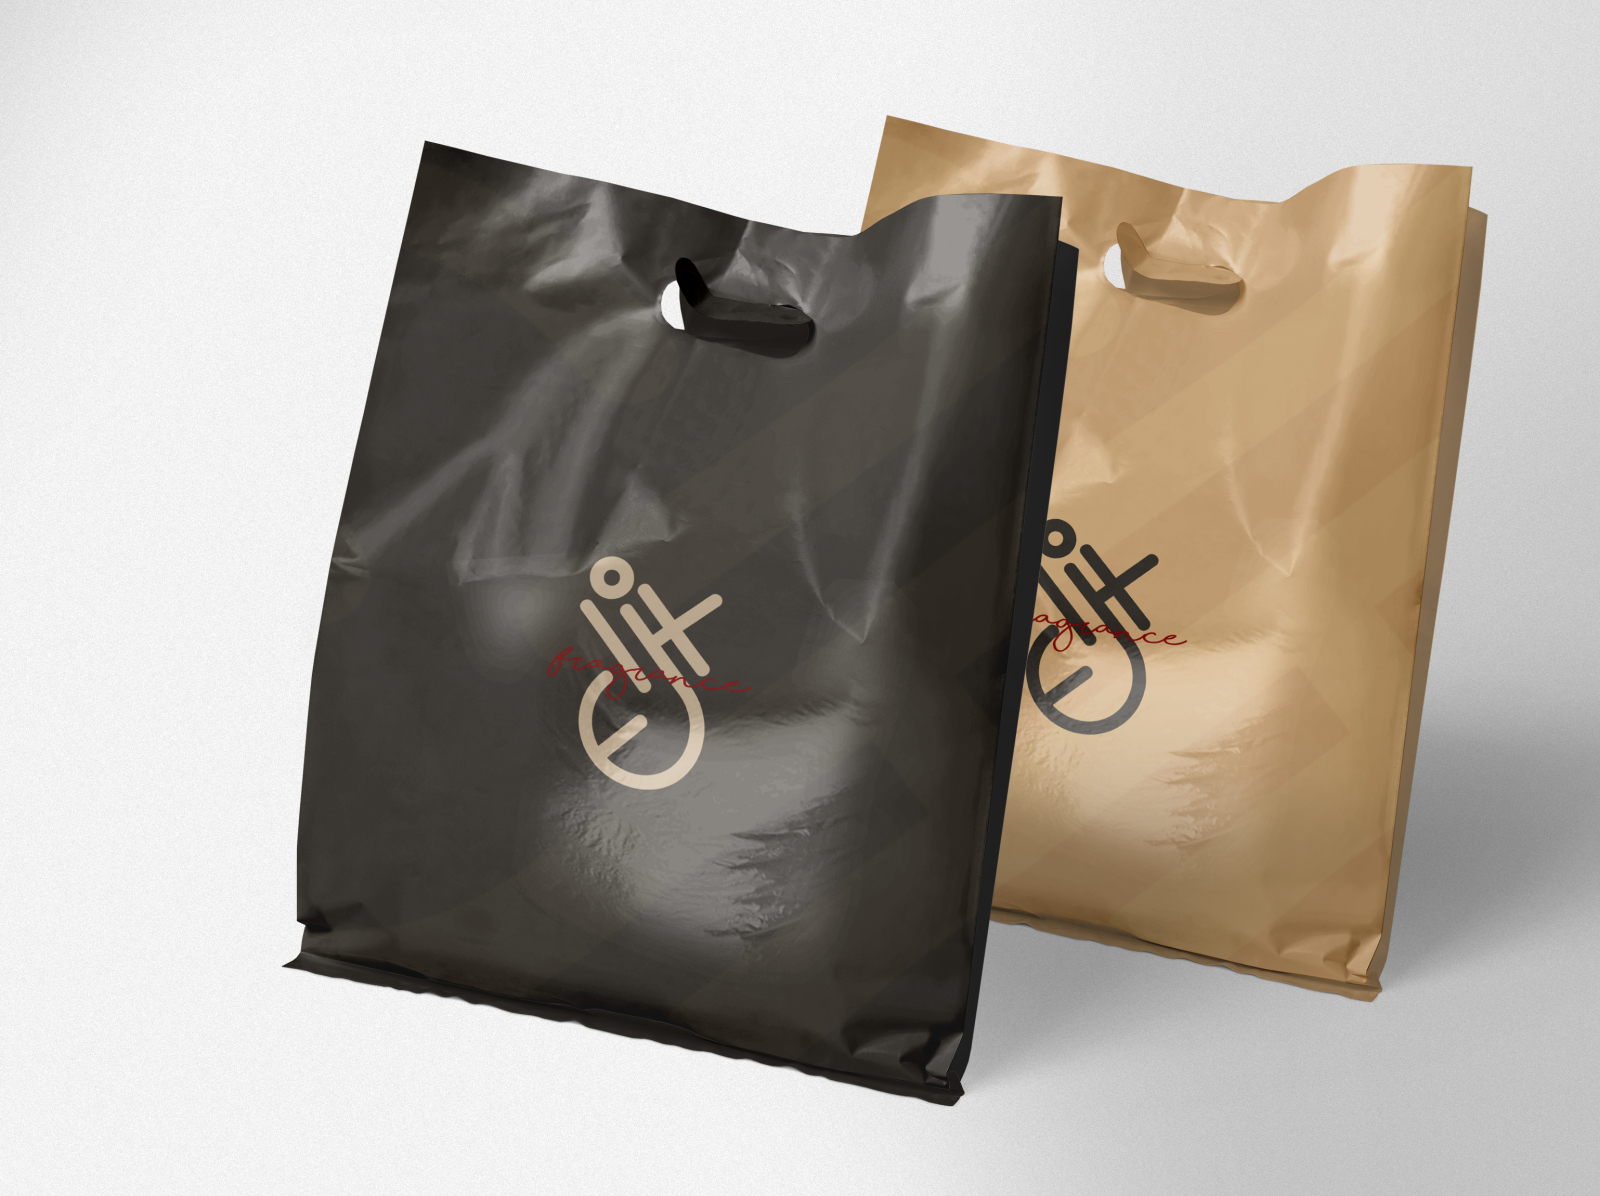 17535 Plastic Carry Bag Design Images Stock Photos  Vectors   Shutterstock